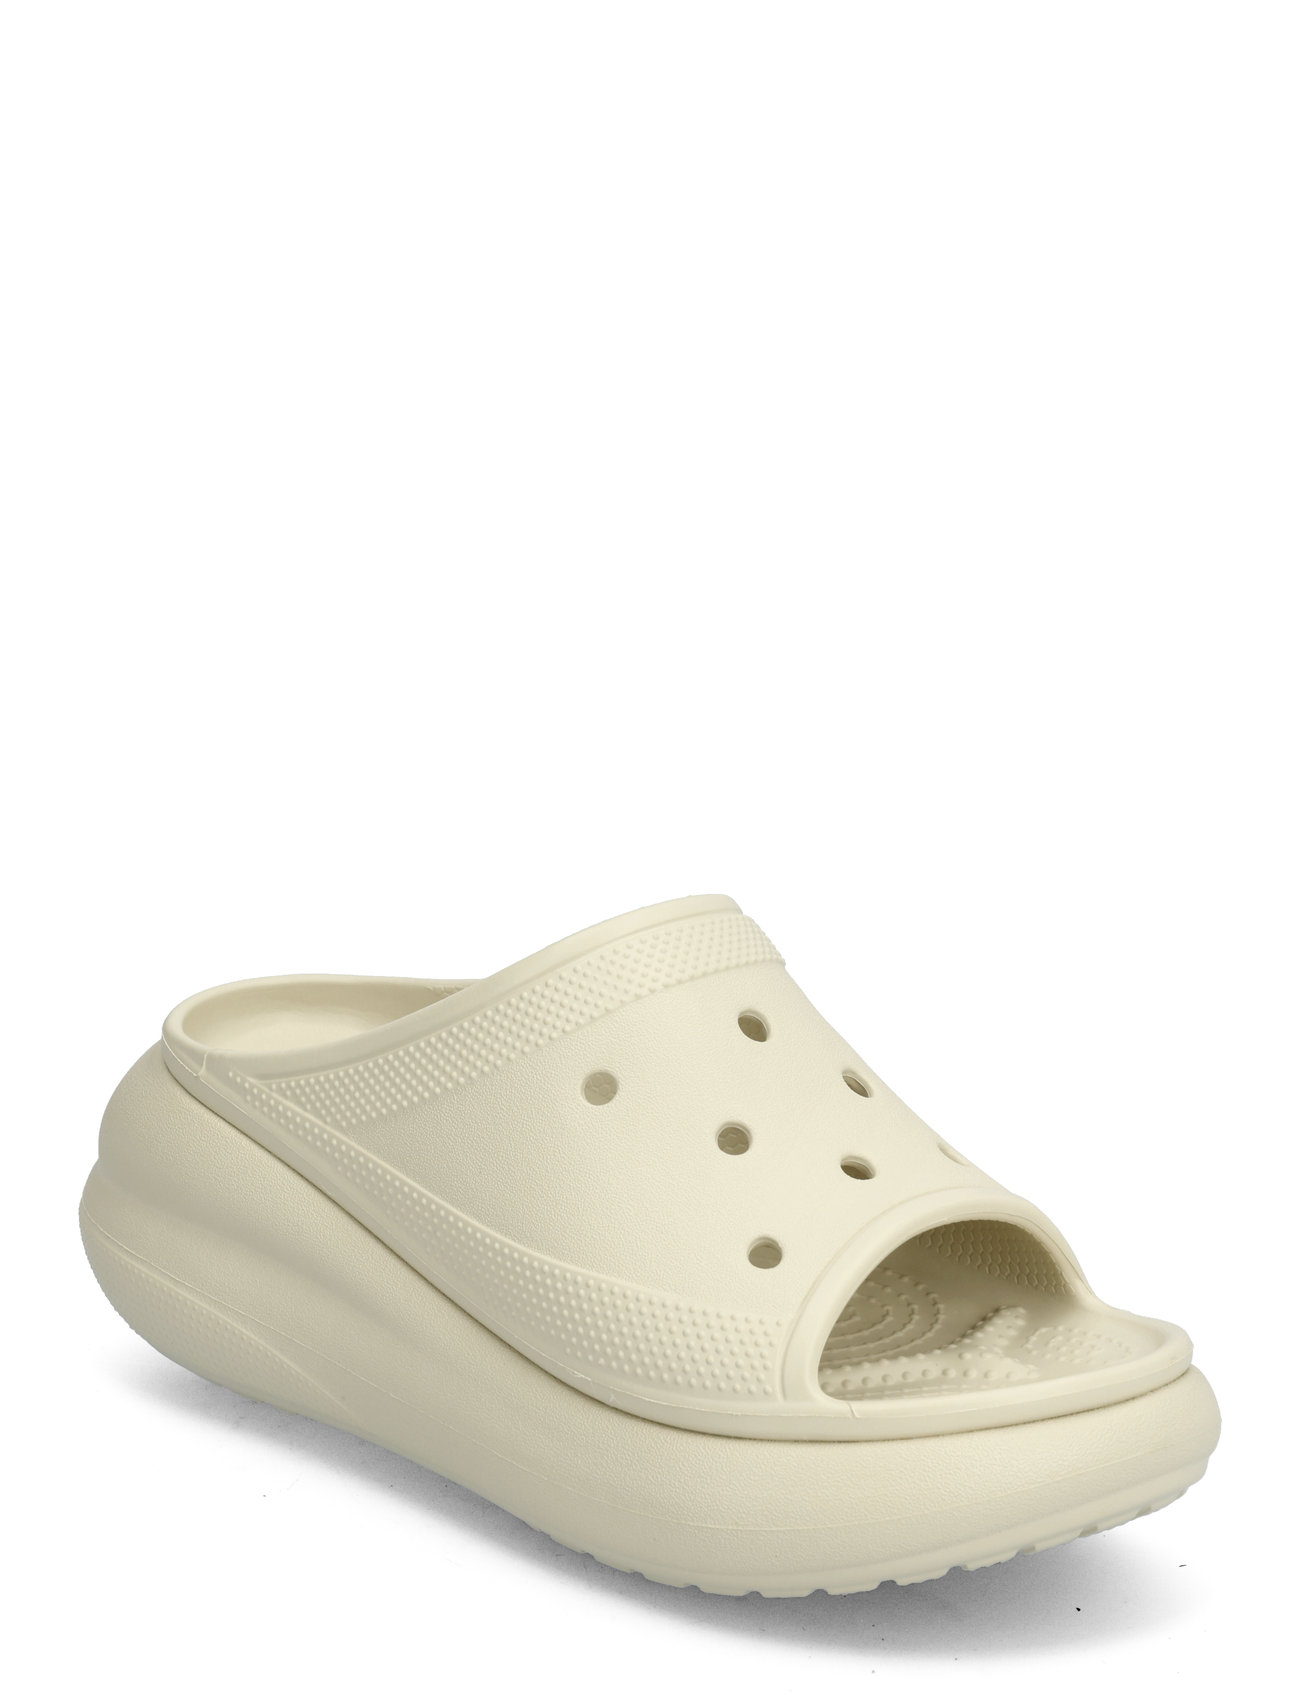 Crush Slide Shoes Clogs Cream Crocs